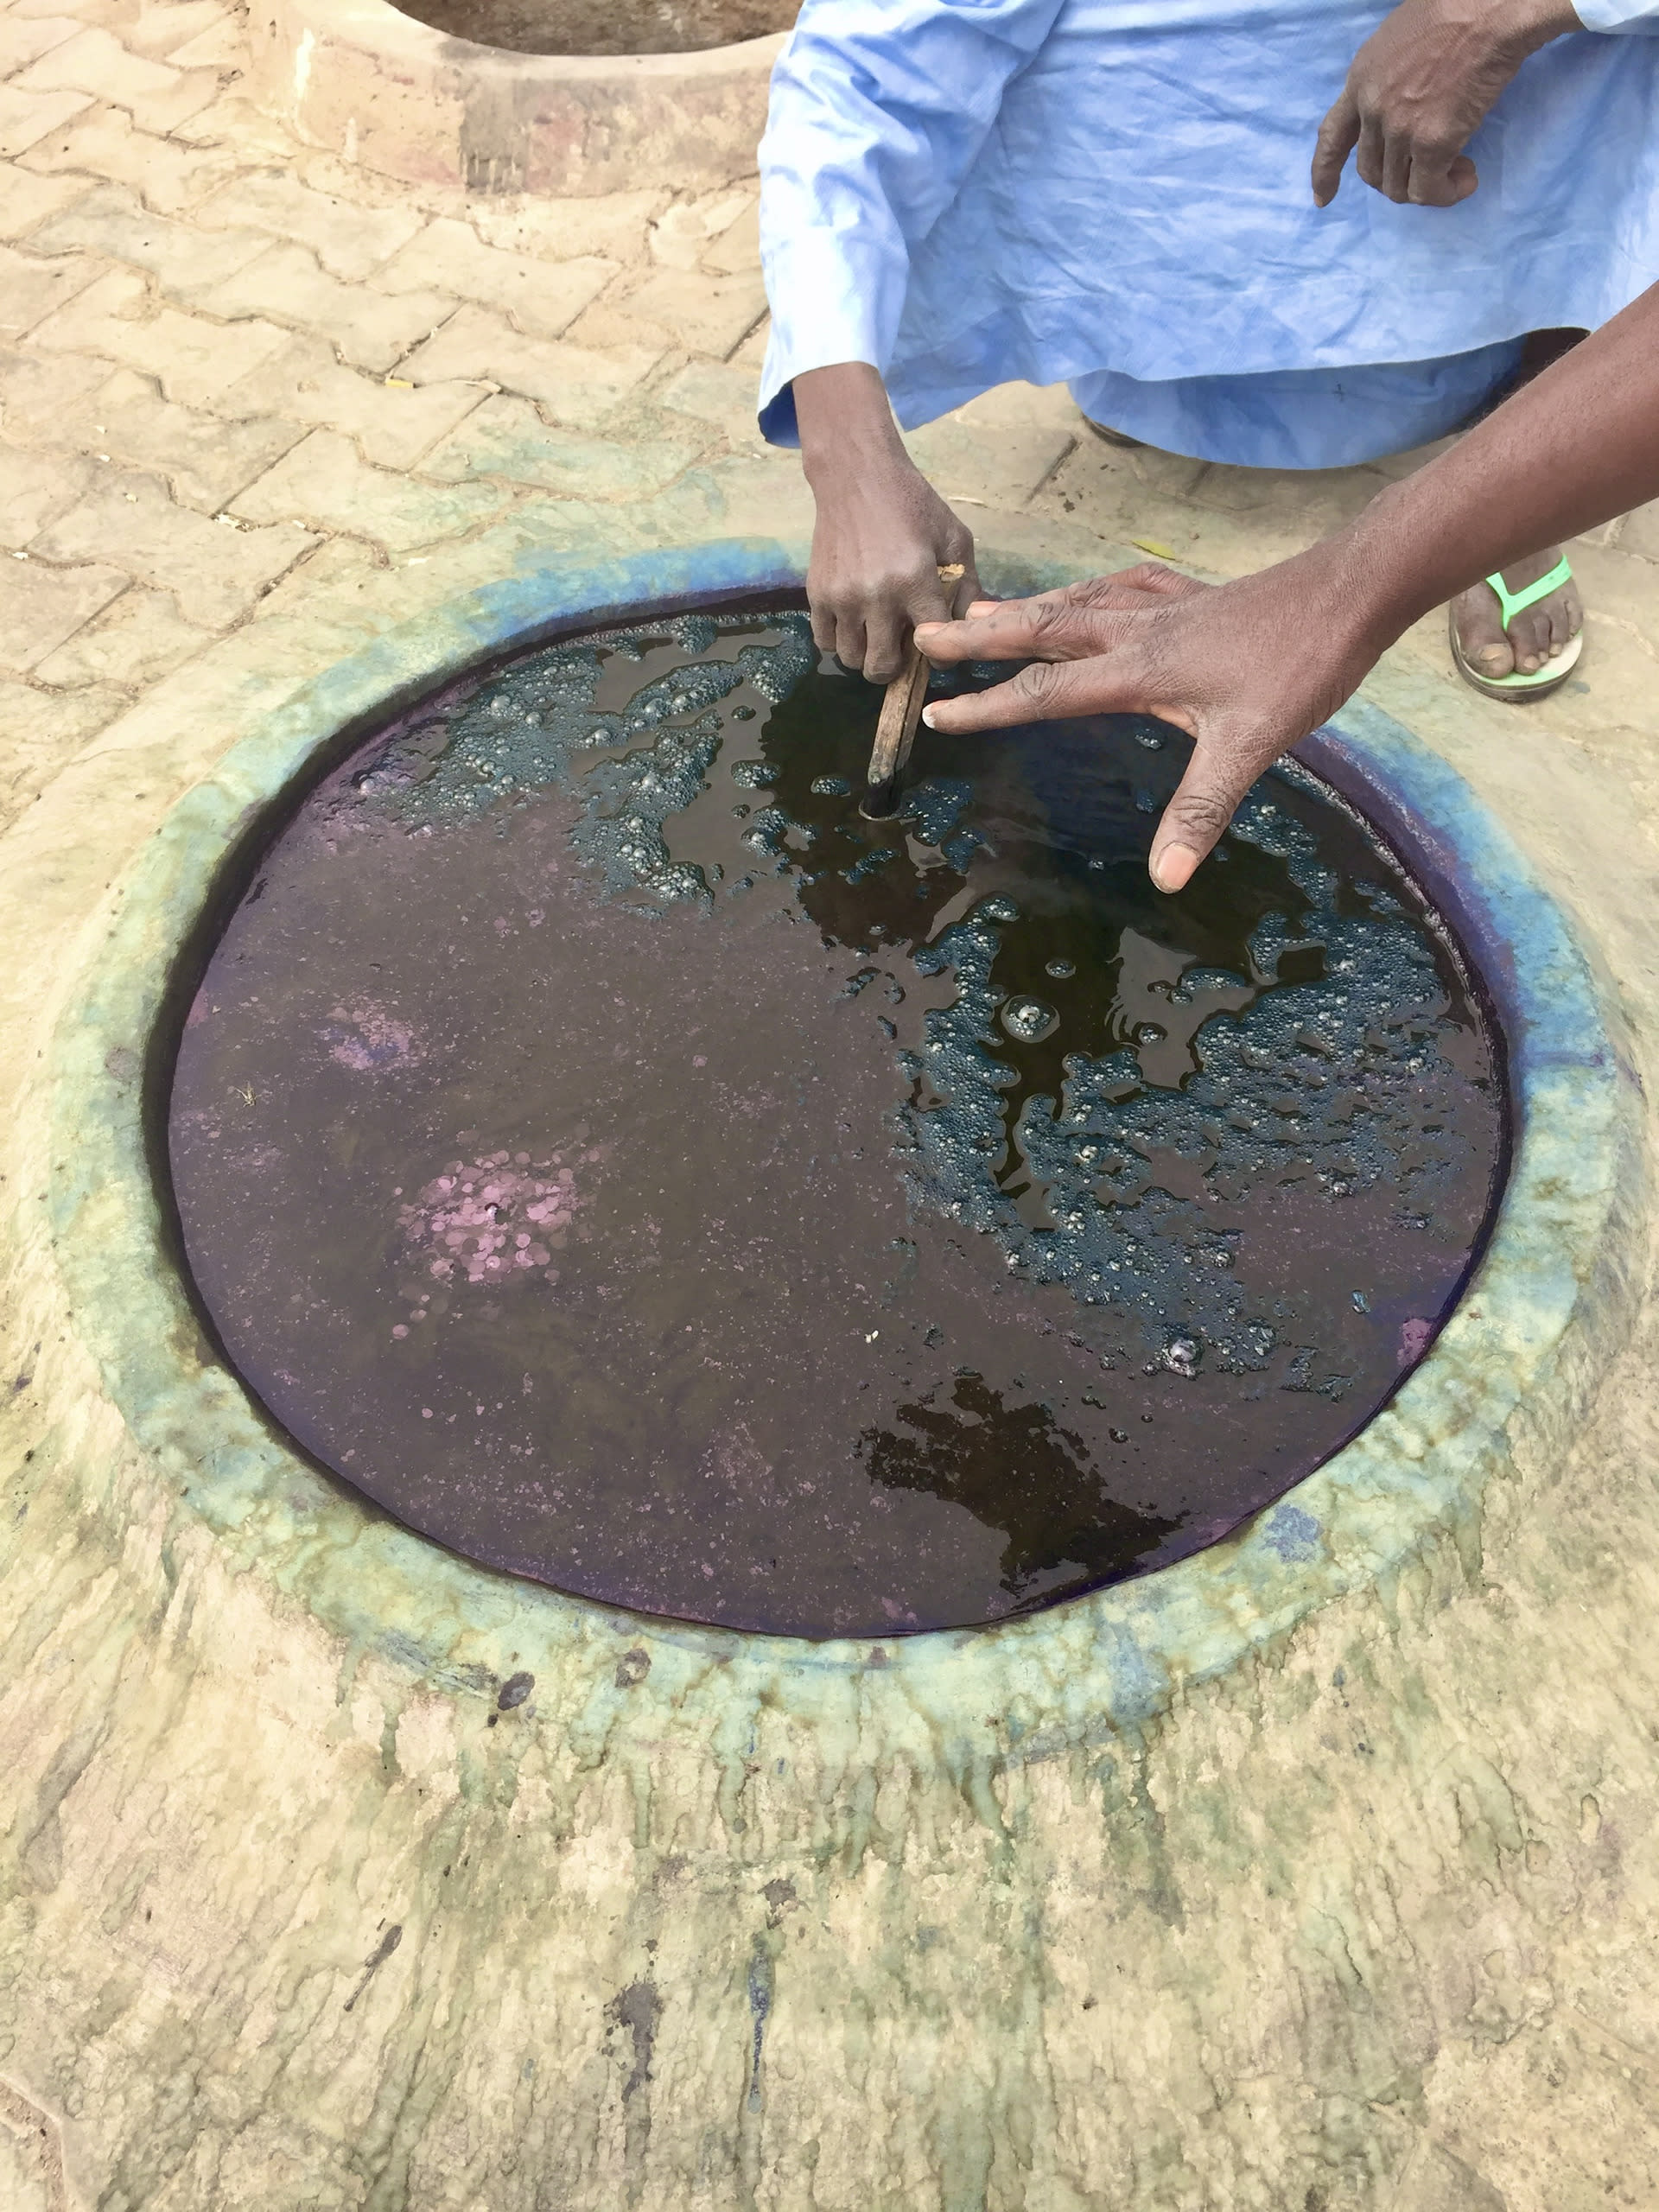 An indigo dye pit in Kano, Nigeria.